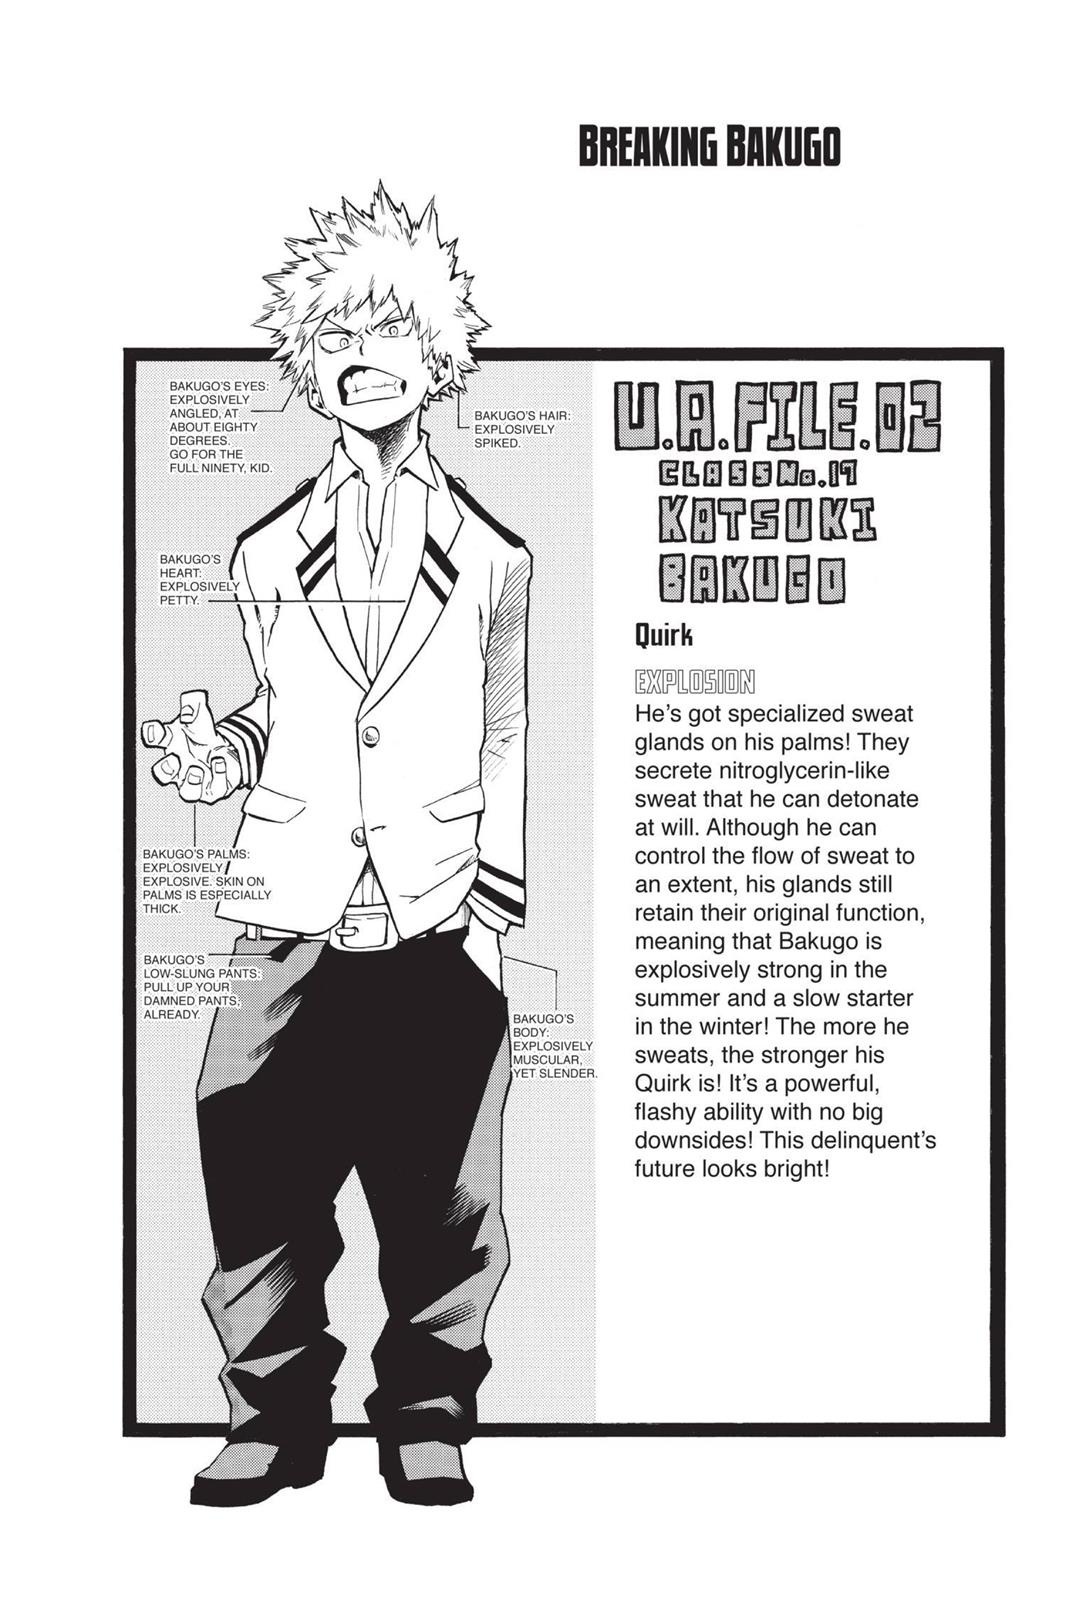 How Tall Is Bakugo in My Hero Academia? - The Escapist